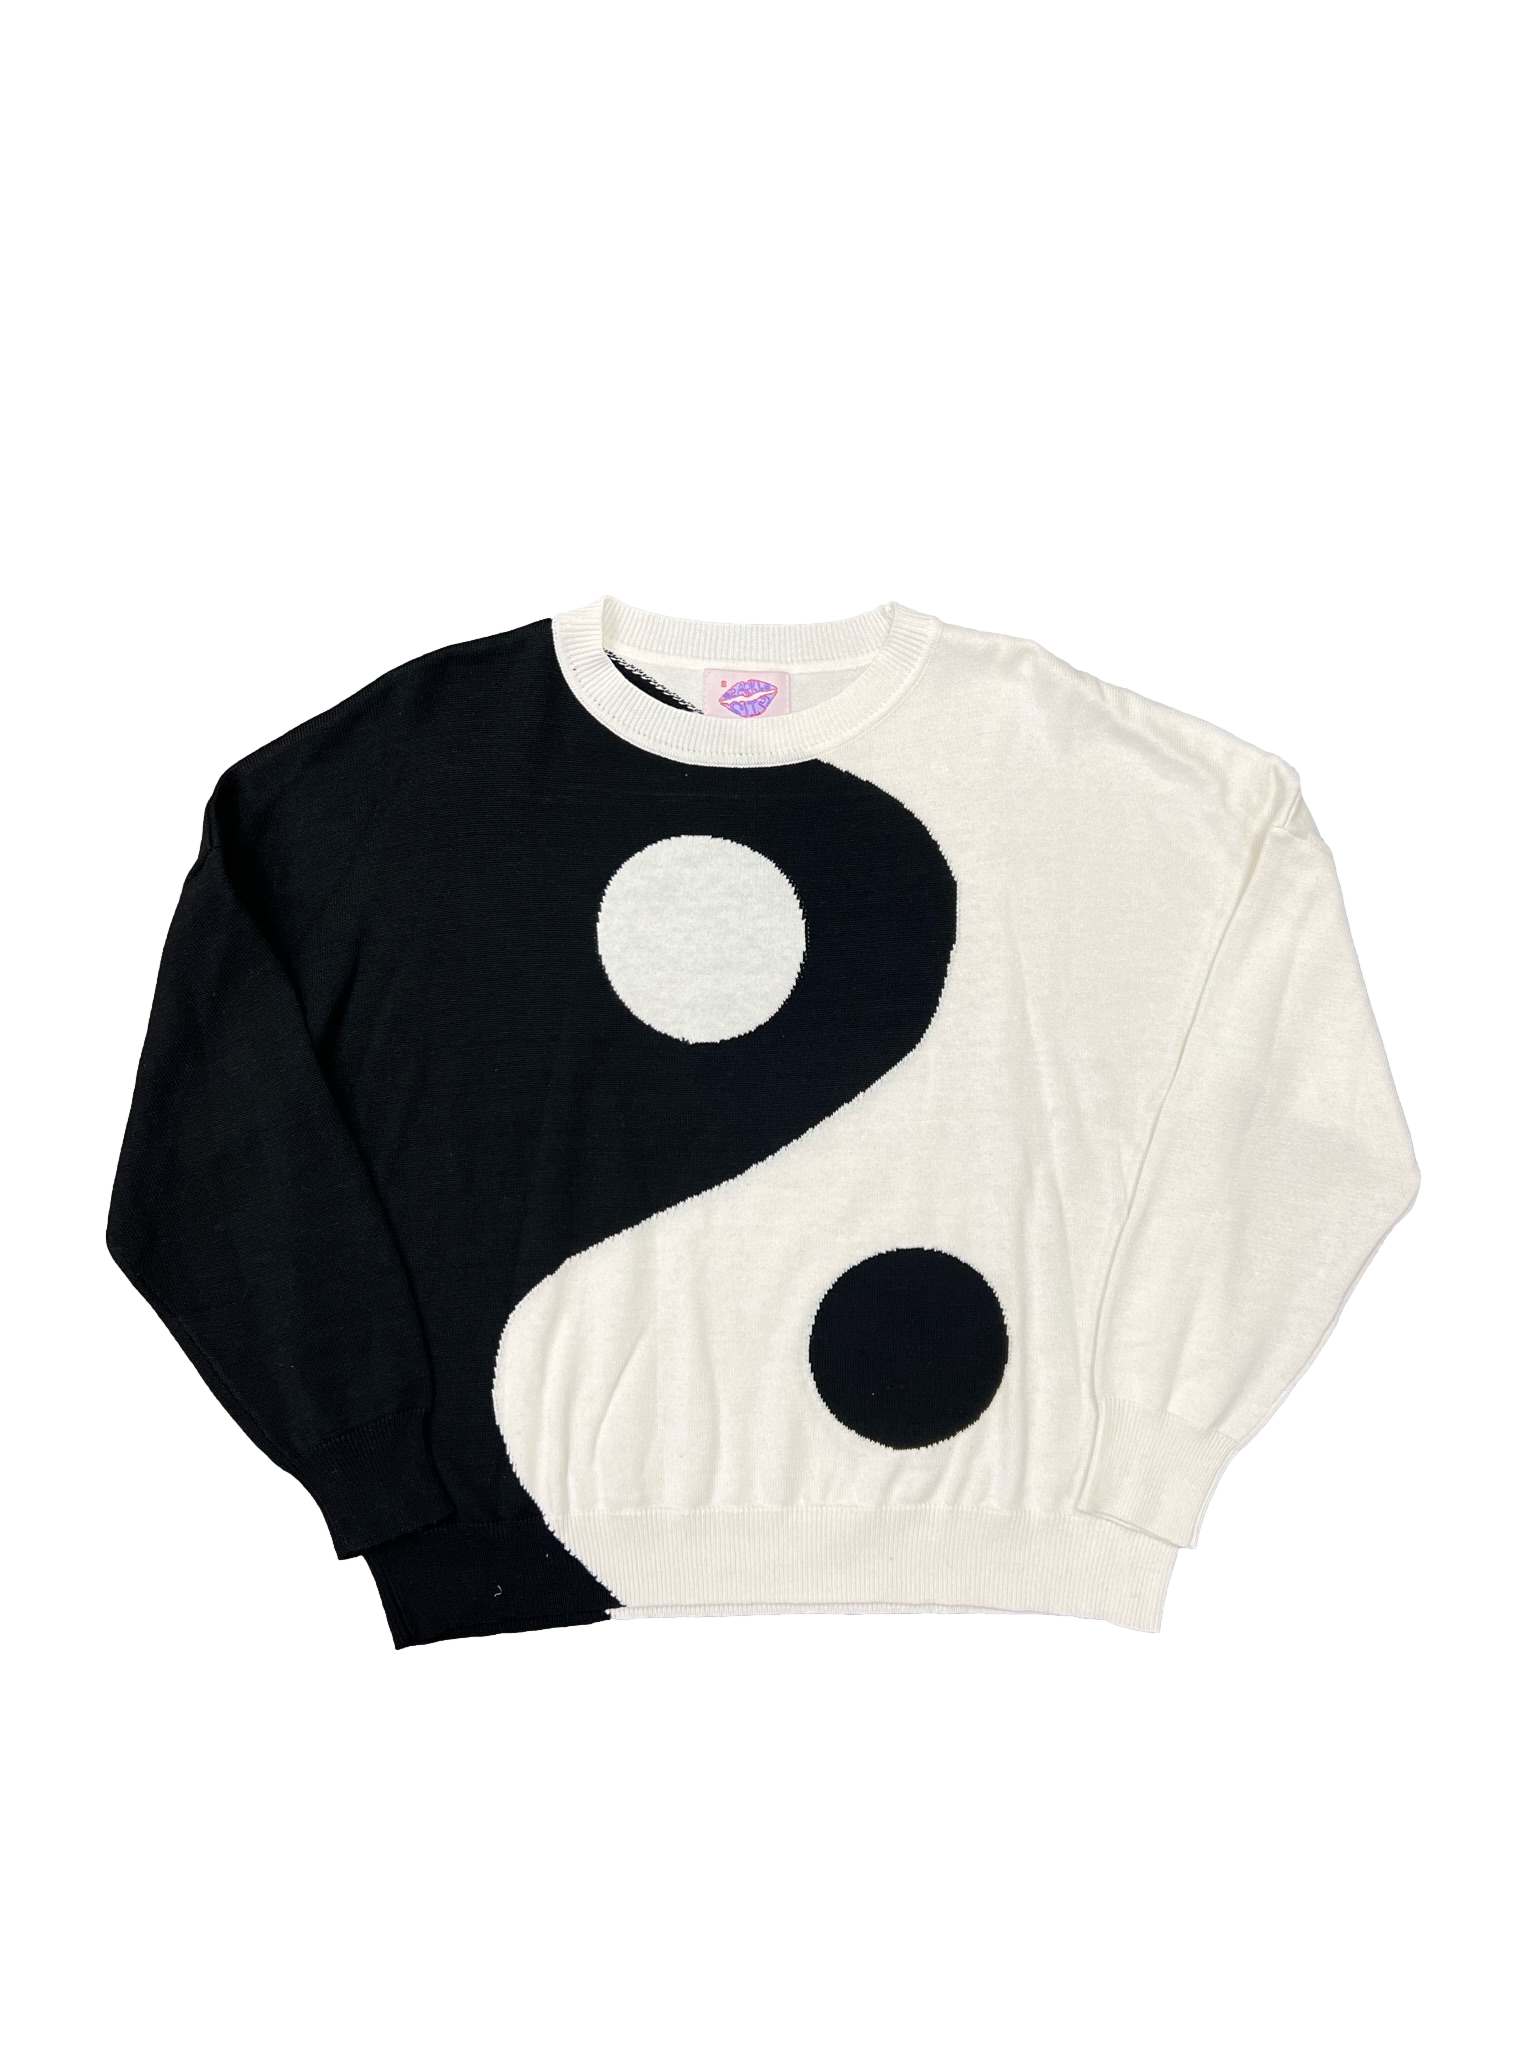 Yin Yang Sweater - Black and White